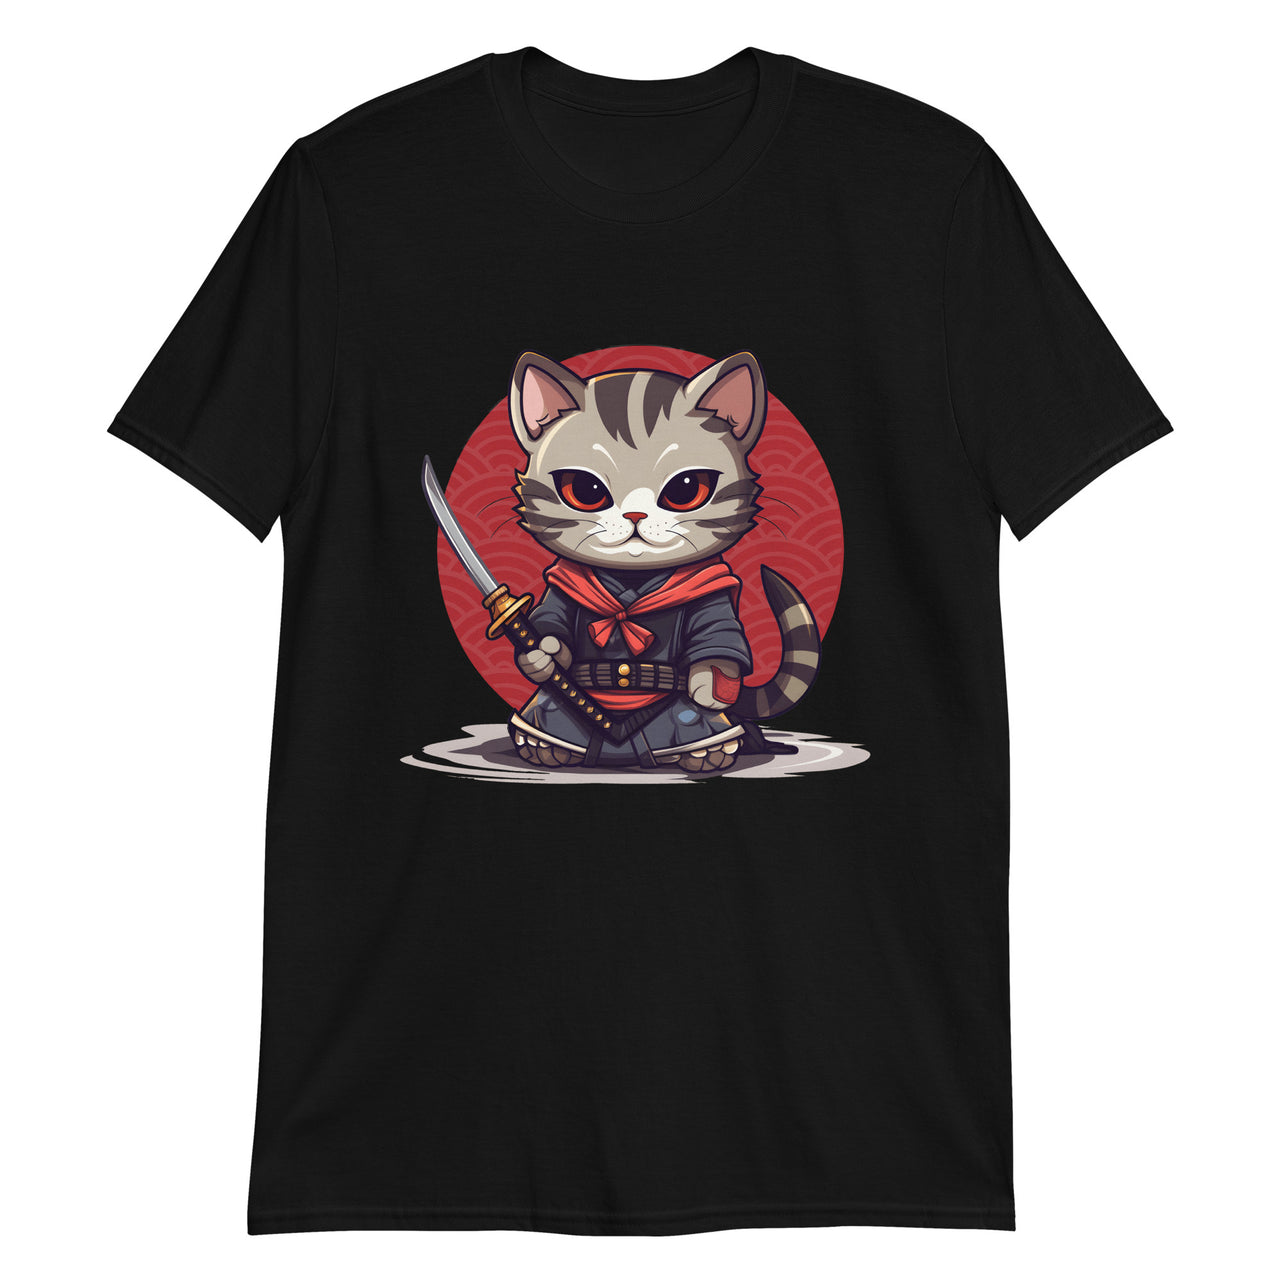 Samurai Cat: Feline Warrior with Katana T-Shirt